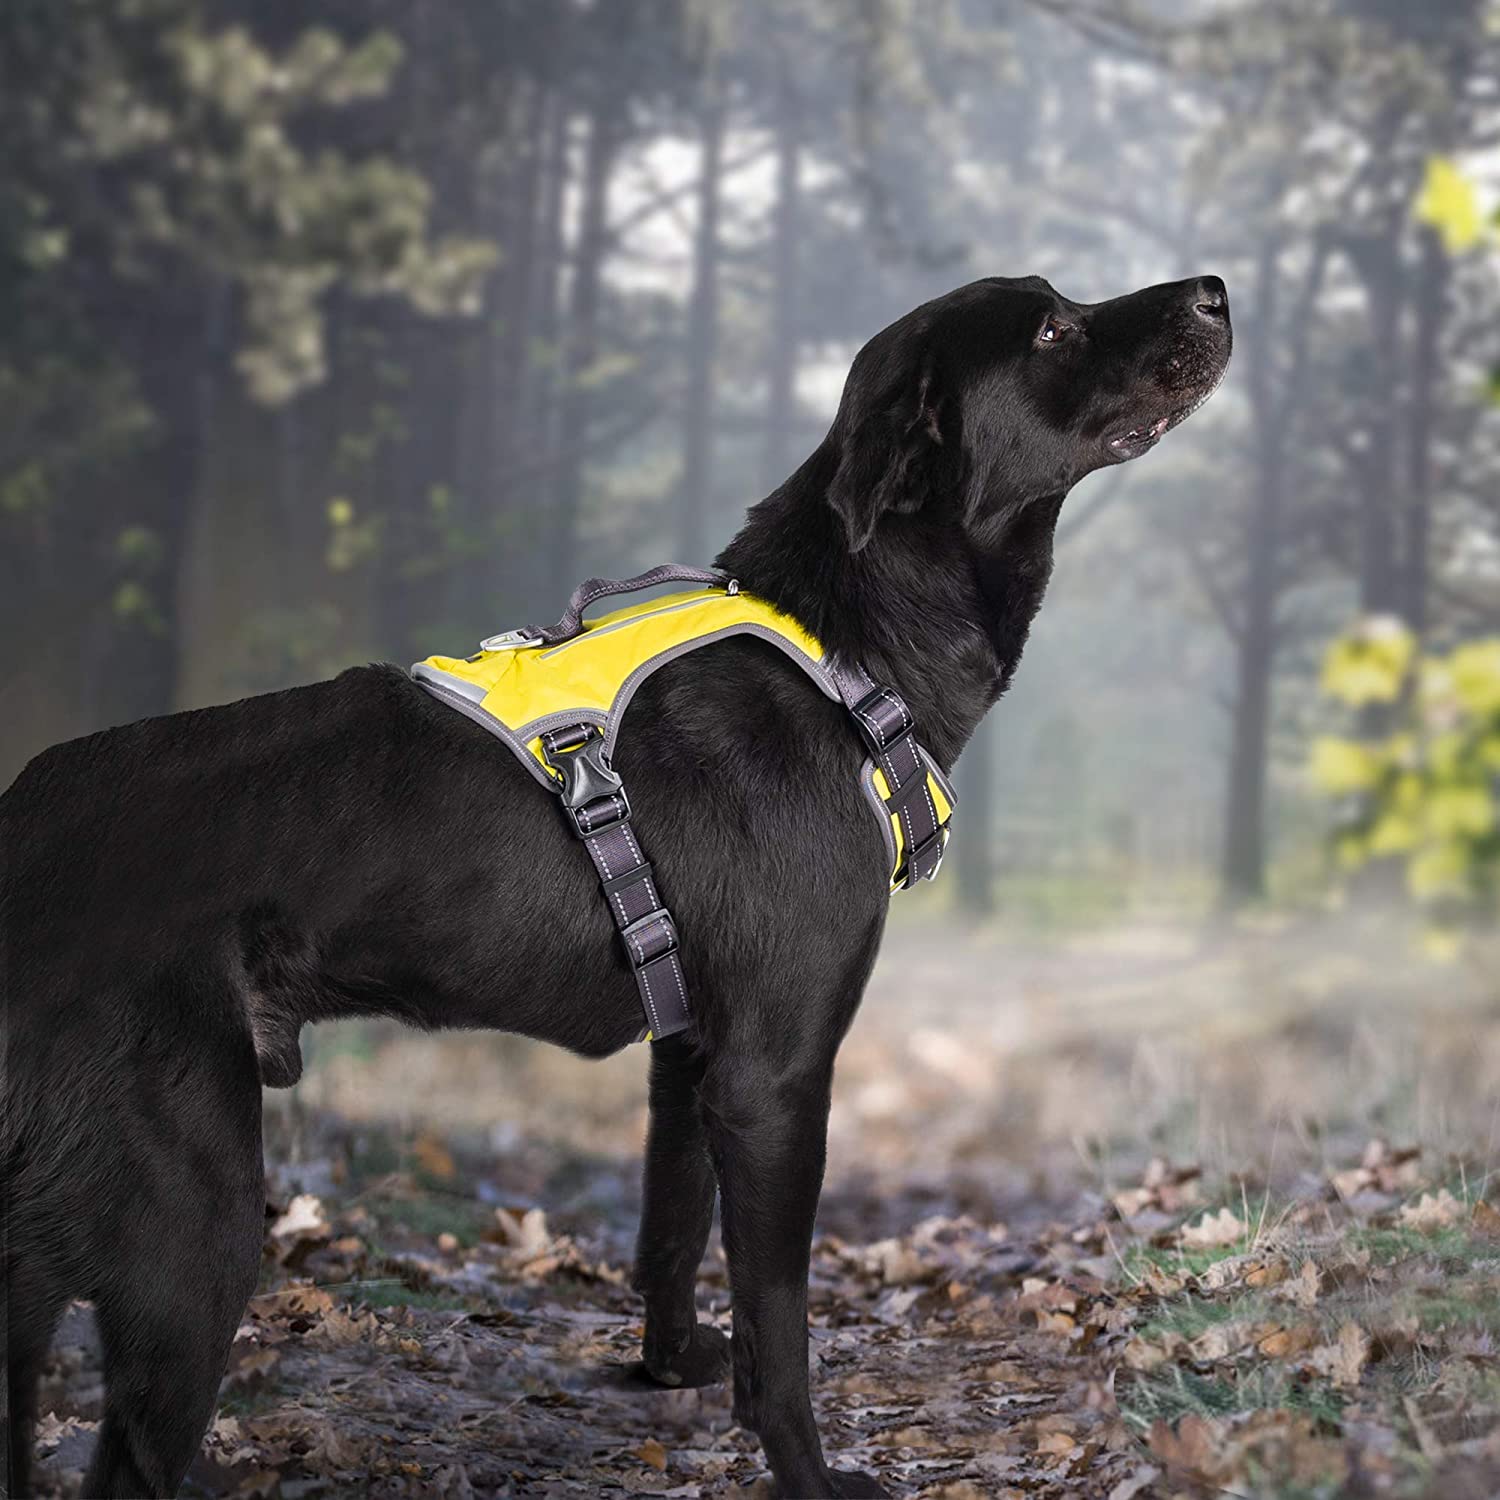 Sort hund med gul refleksvest